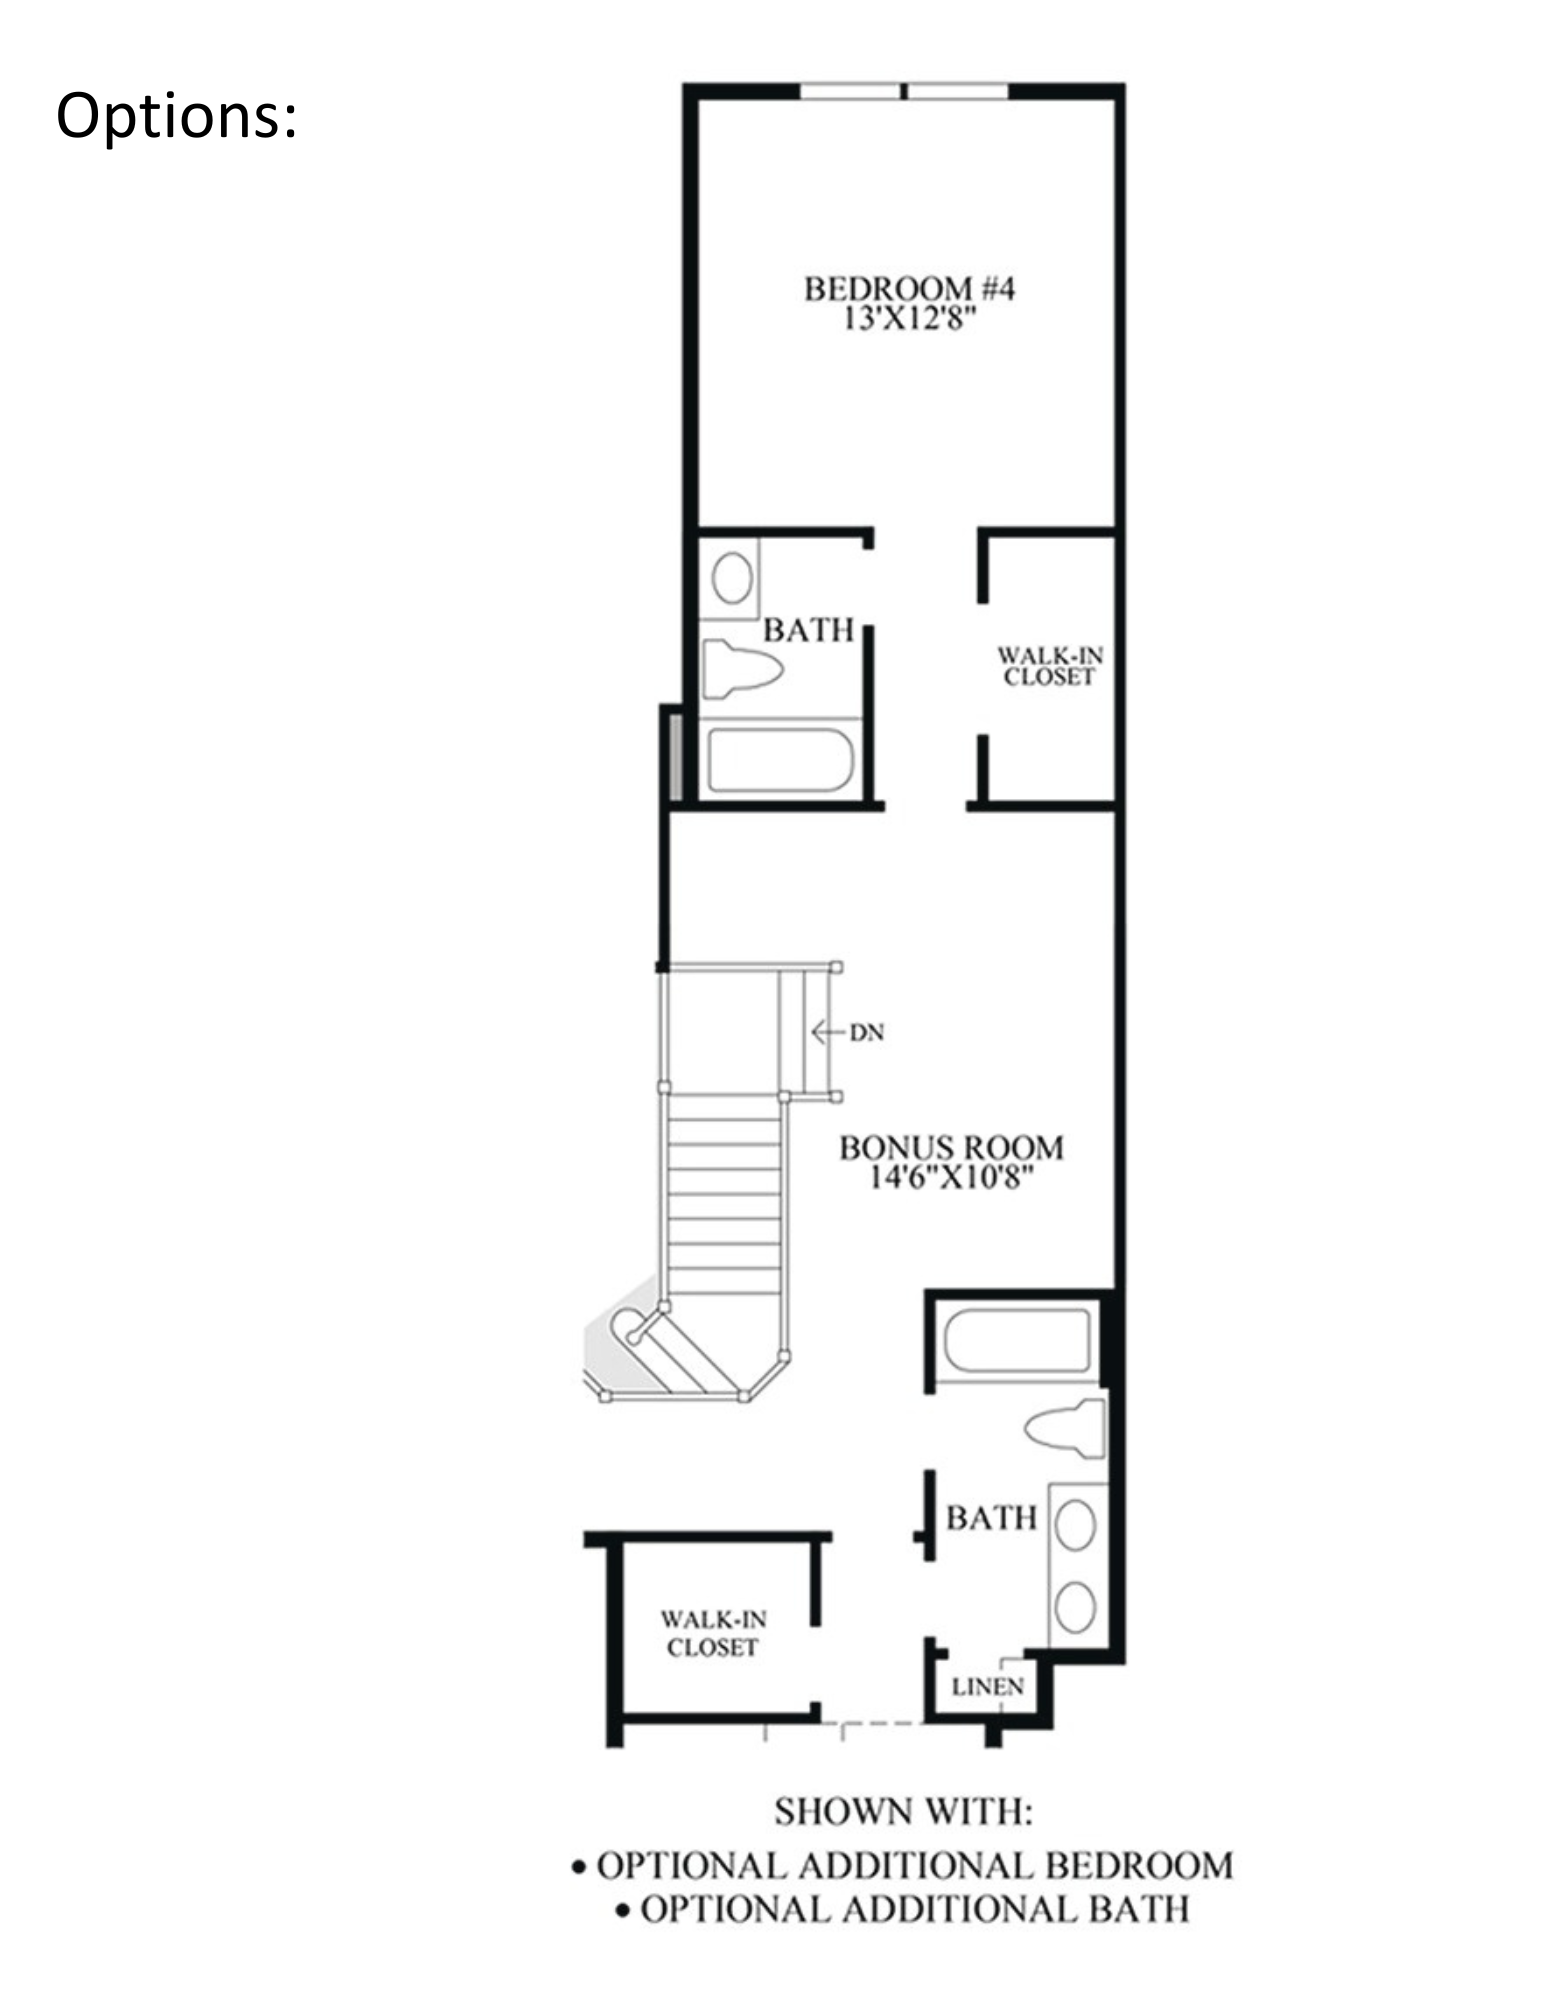 Enclave at Upper Makefield Vassar Model Options - 55+ Housing Options